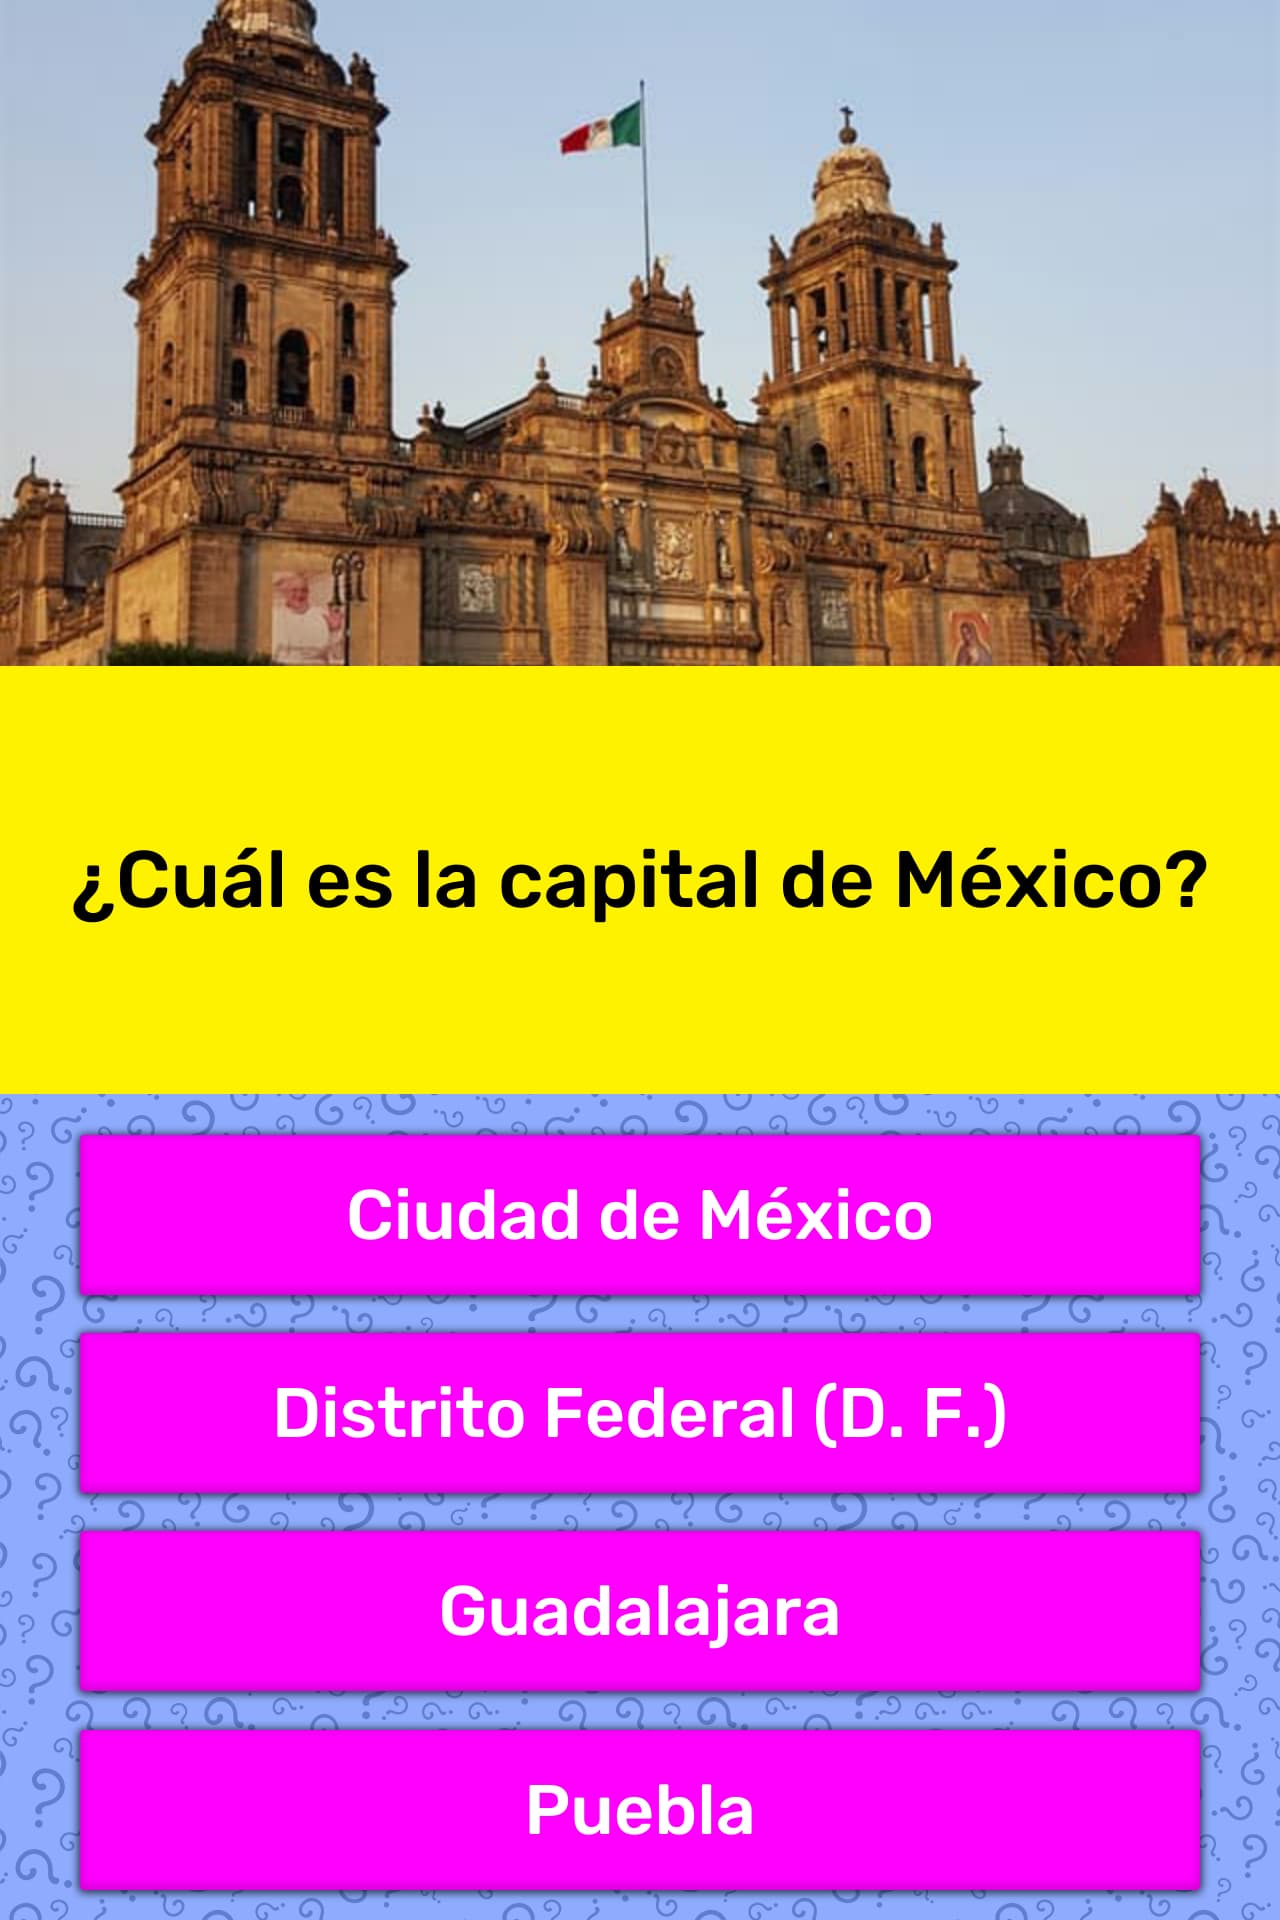 ¿Cuál es la capital de México? | La respuesta de Trivia | QuizzClub